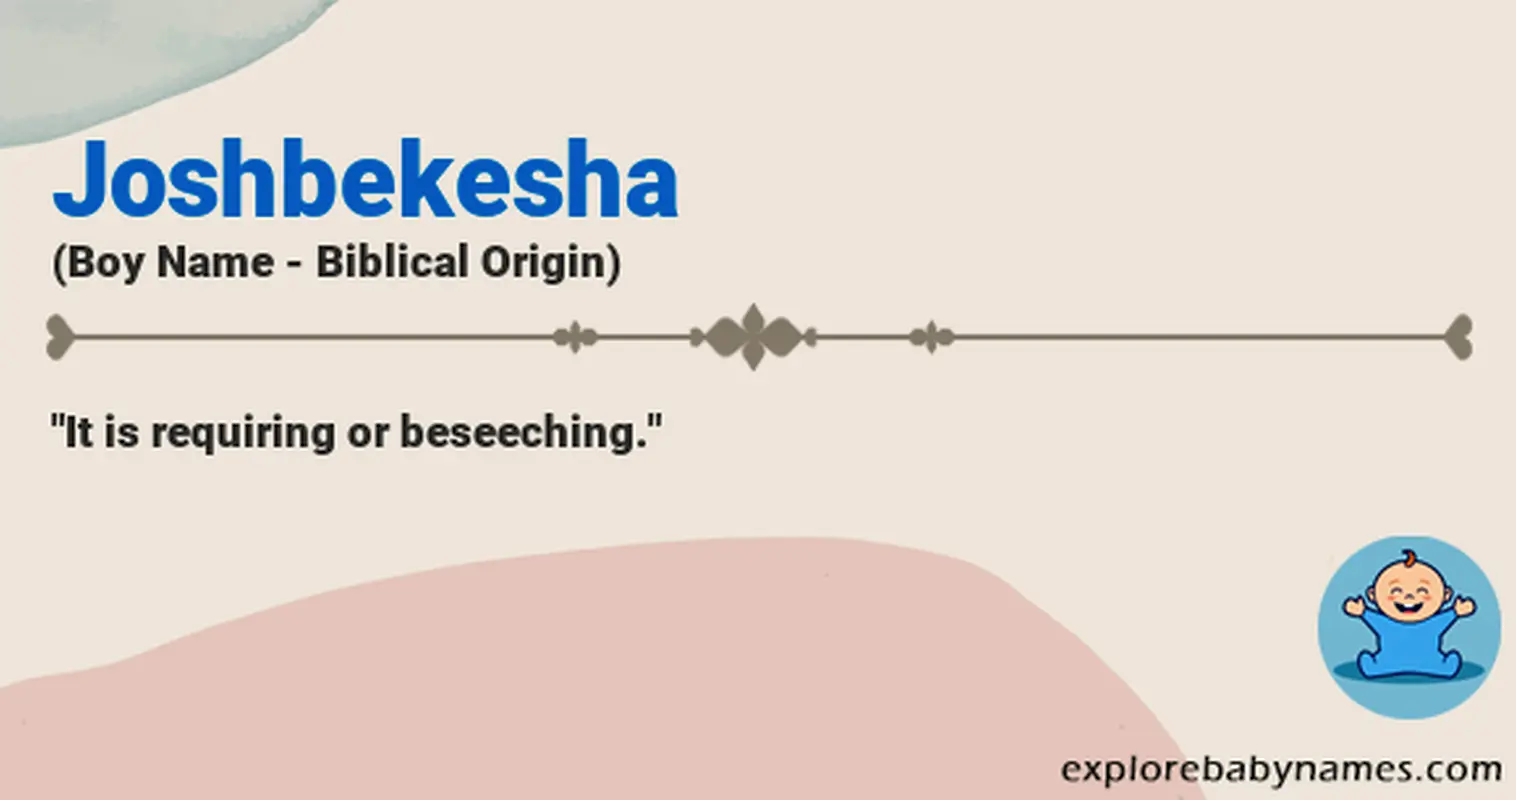 Meaning of Joshbekesha